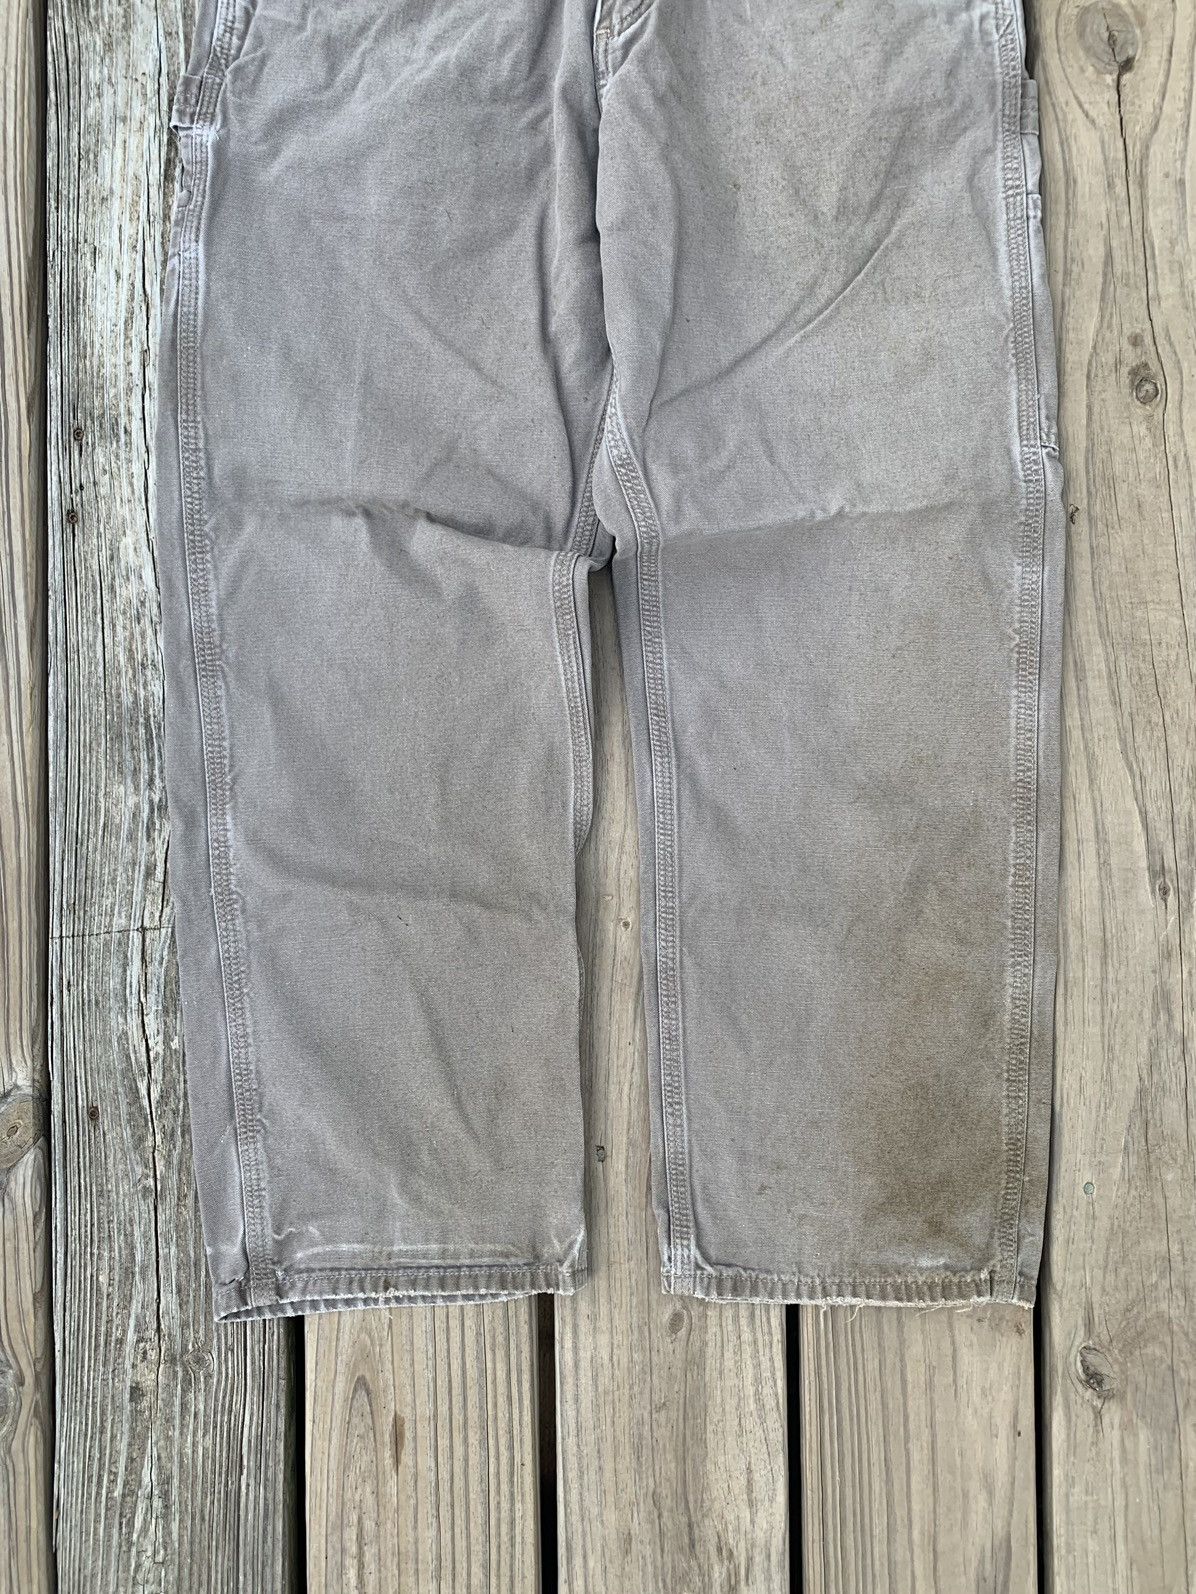 Vintage Vintage Carhartt Carpenter Pants Size US 32 / EU 48 - 3 Thumbnail